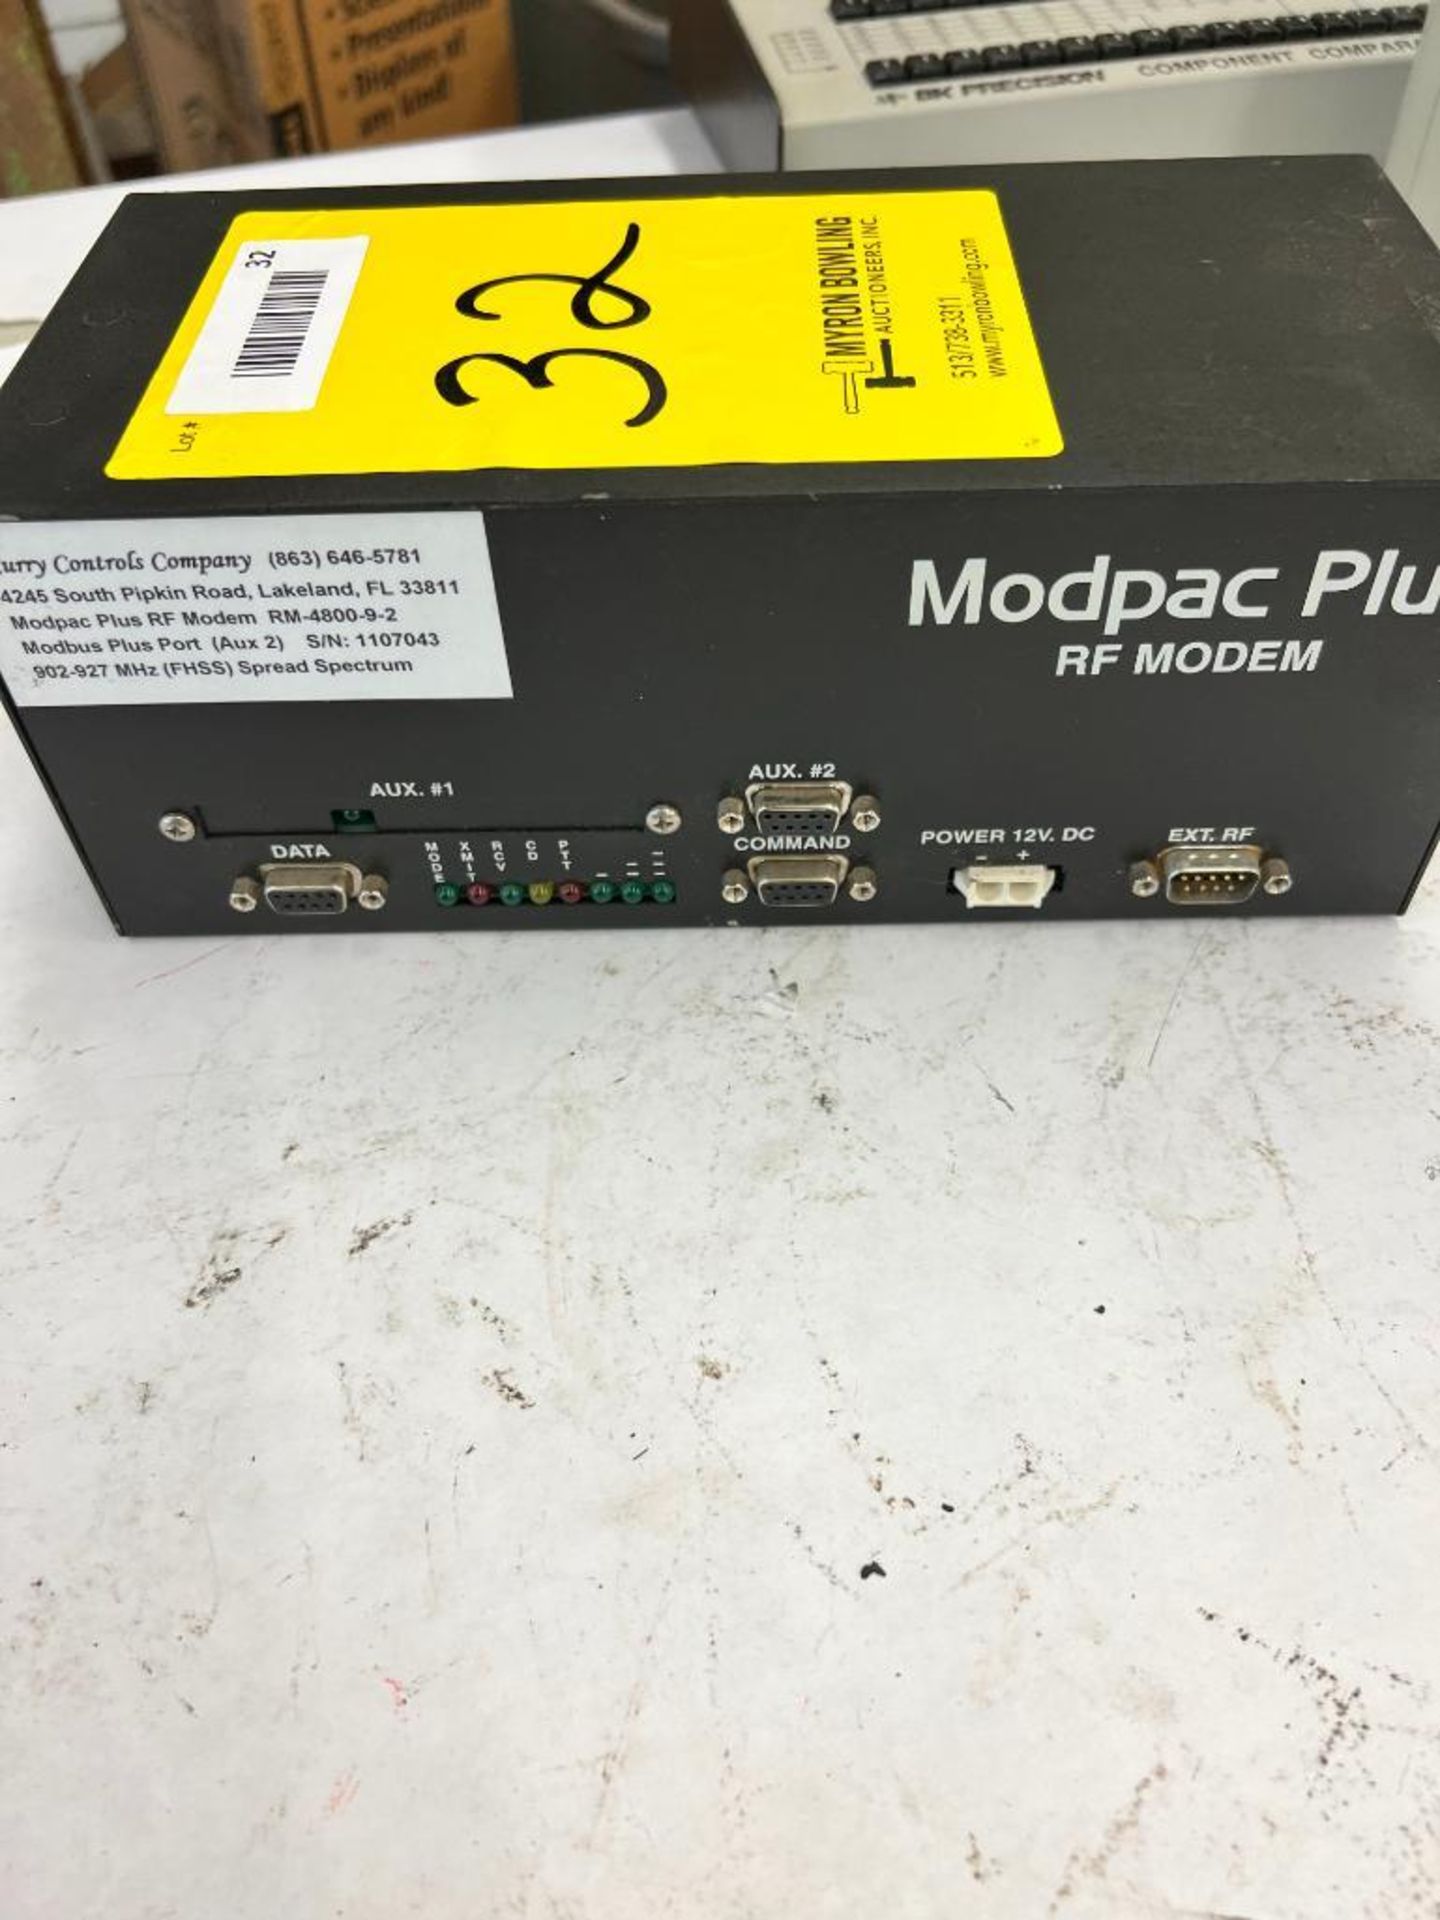 (2) MODPAC PLUS RF MODEMS, MODEL RM-4800-9-2, POWER 12V, DC